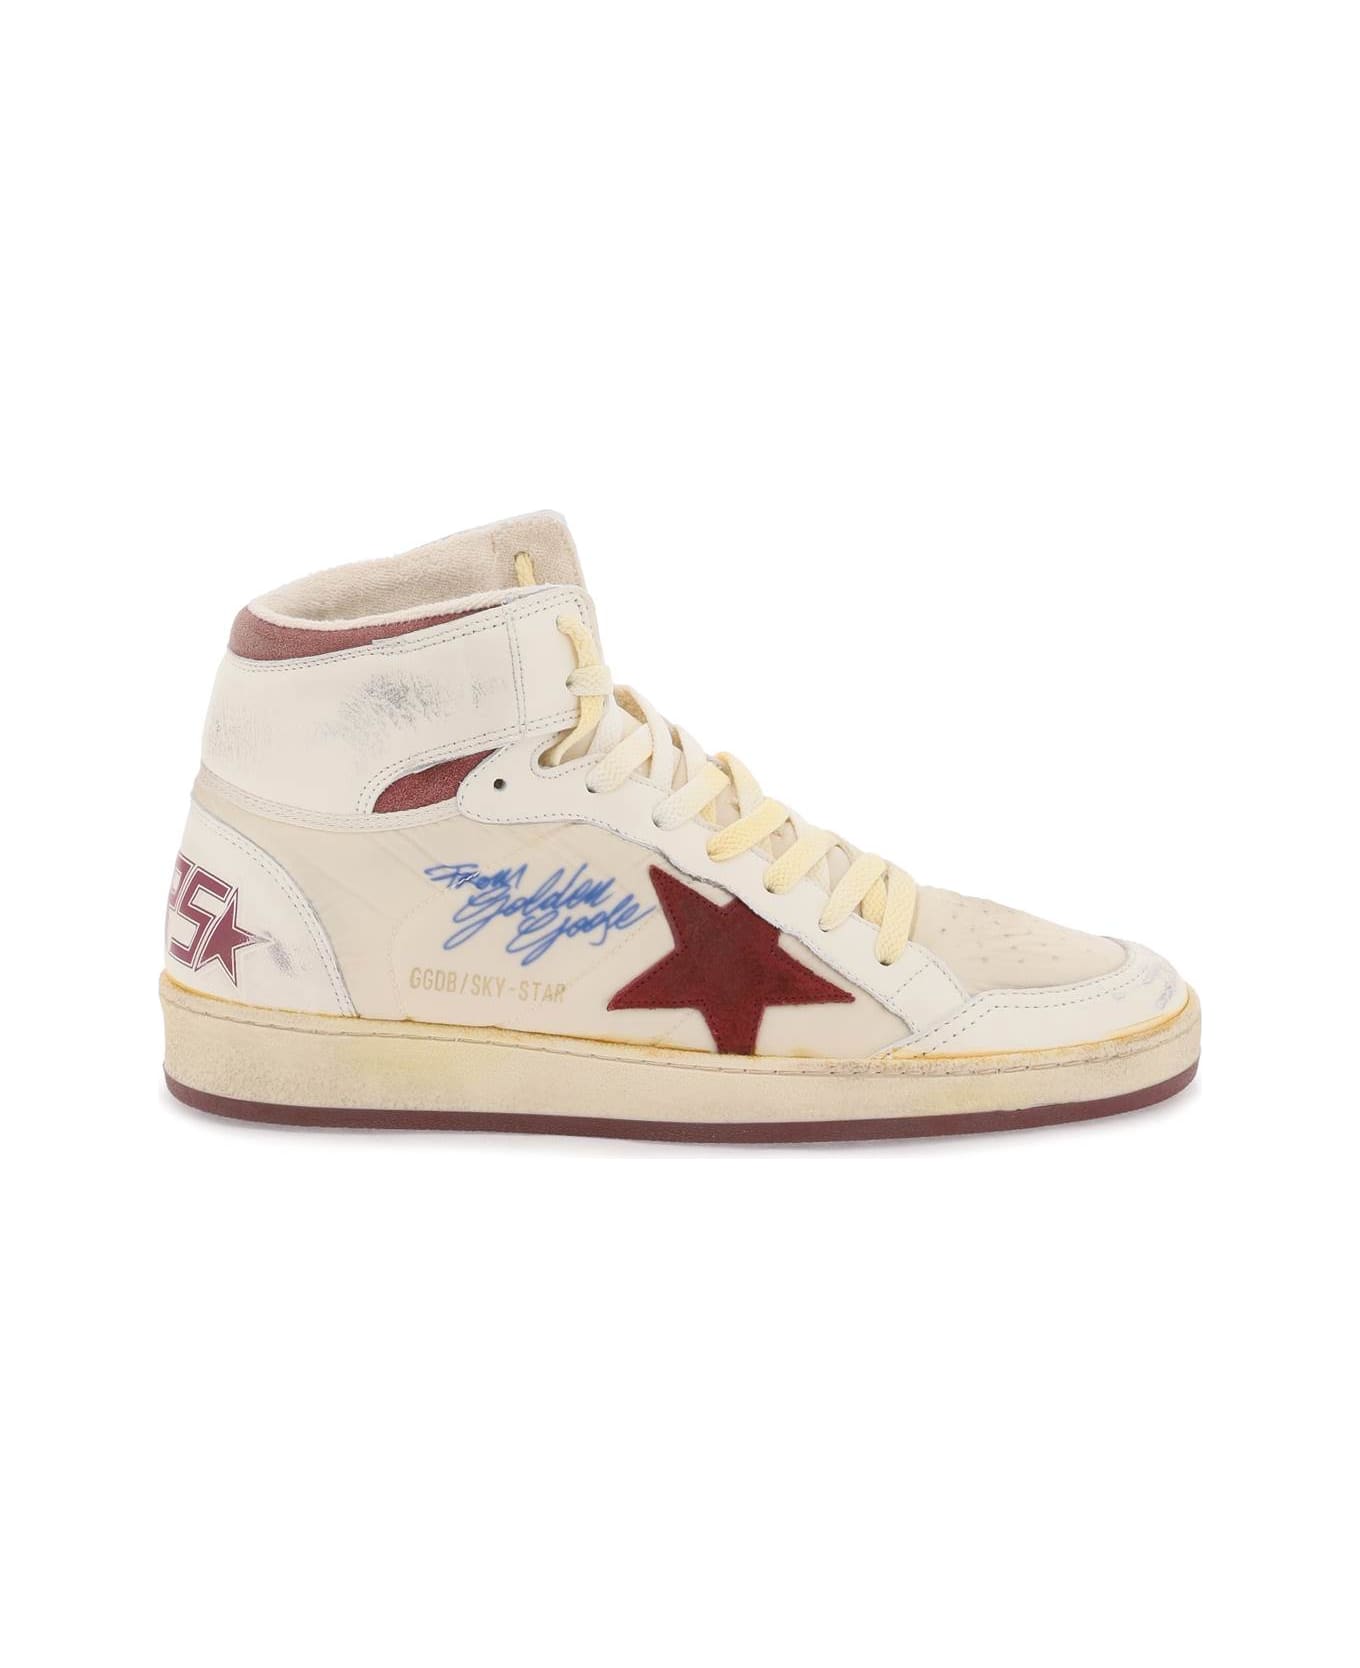 Golden Goose Sky-star Hi-top Sneakers - BEIGE POMEGRANADE WHITE RED